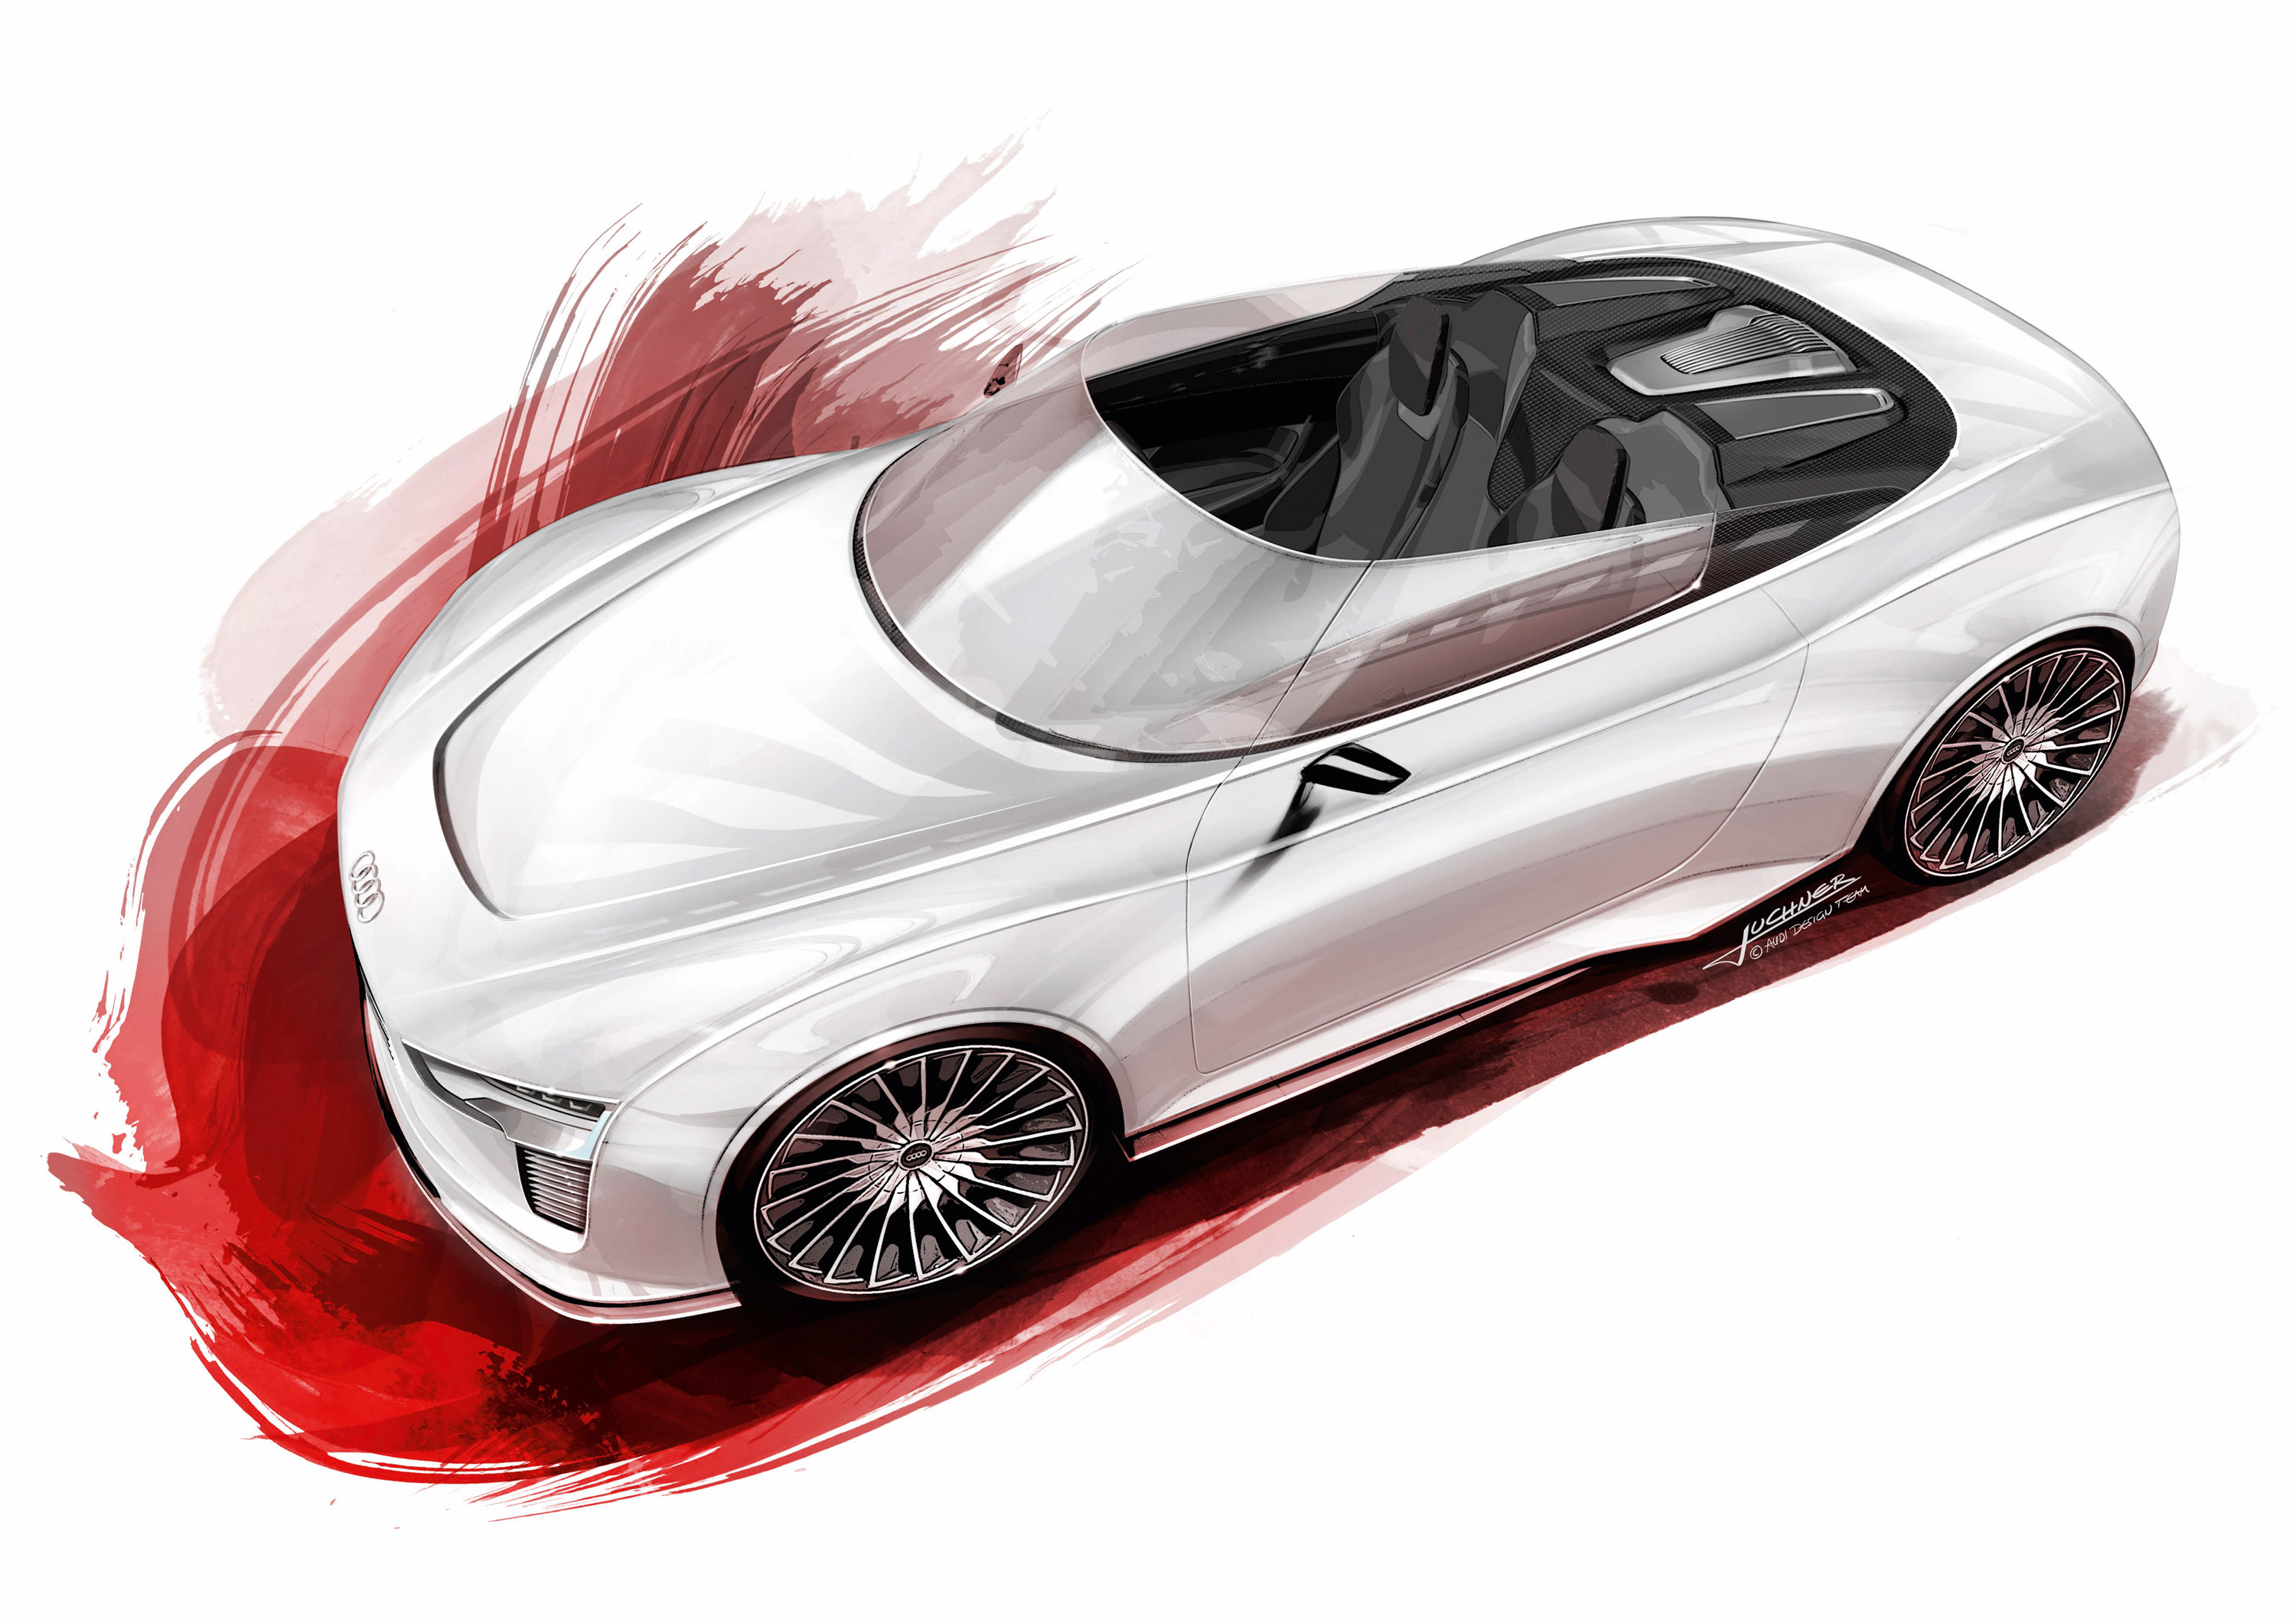 Audi e-tron Spyder sketches